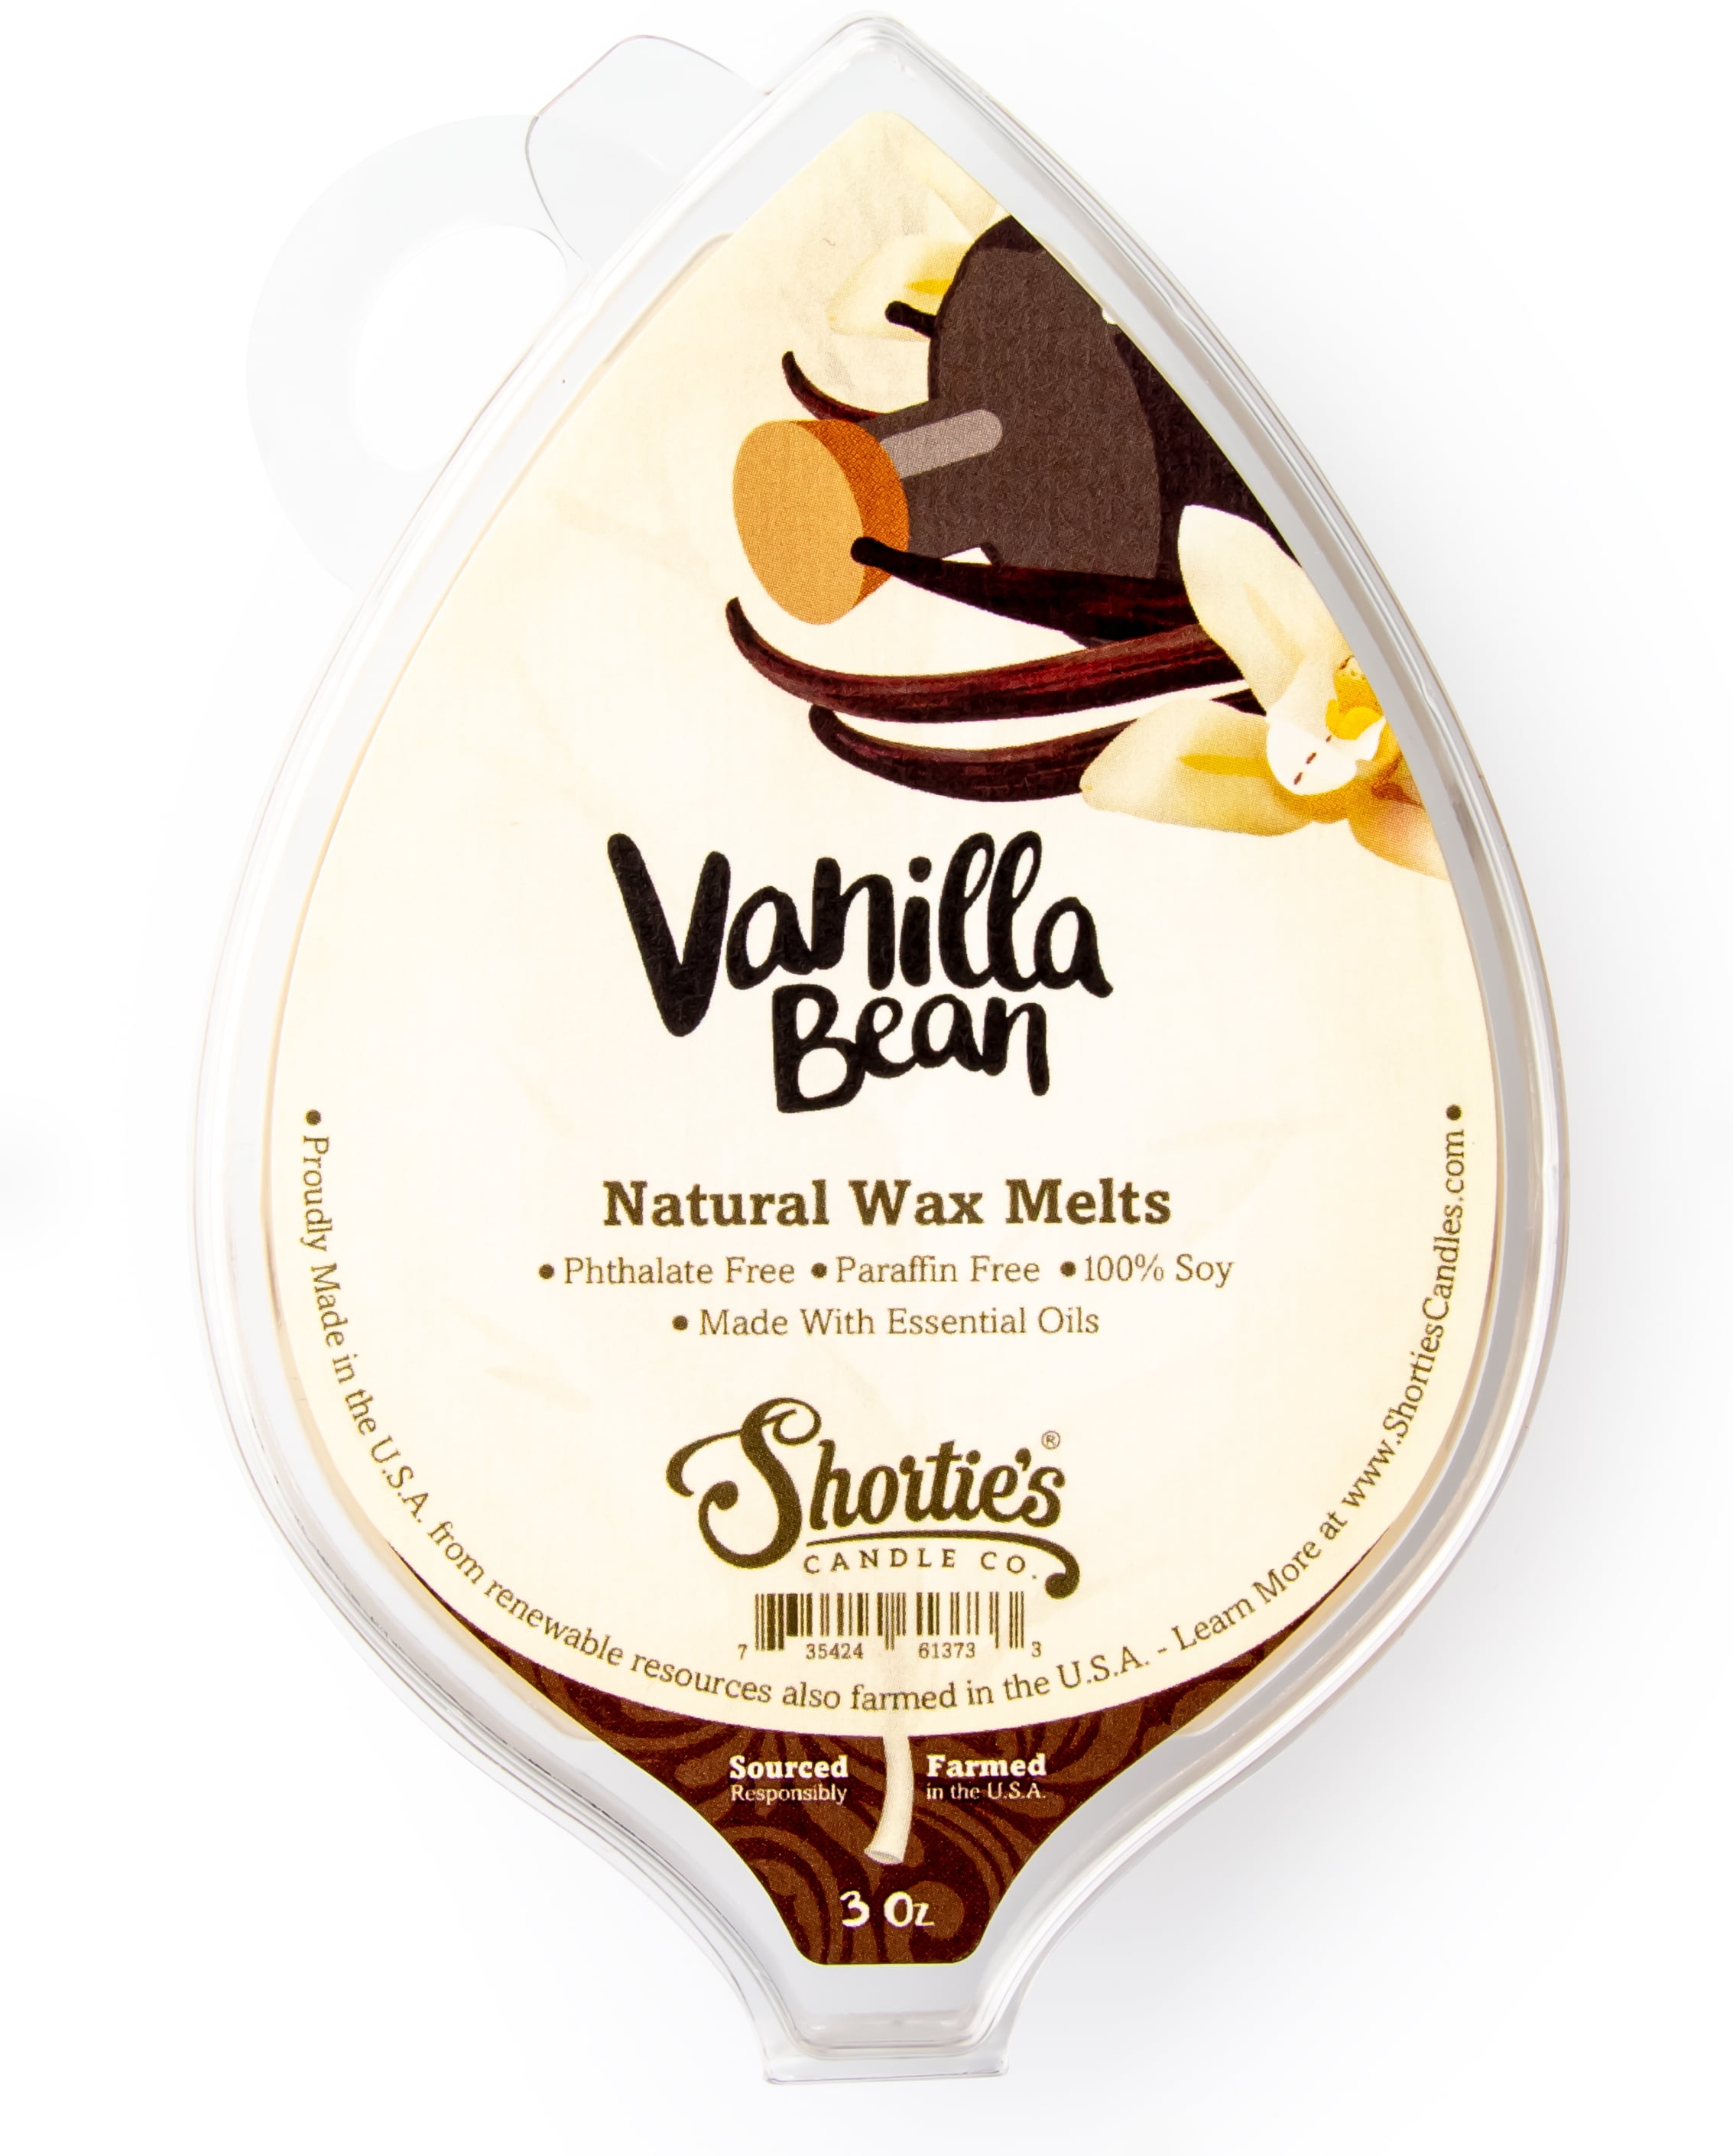 Vanilla Bean Soy Wax Melts - All Natural + Essential Oils +